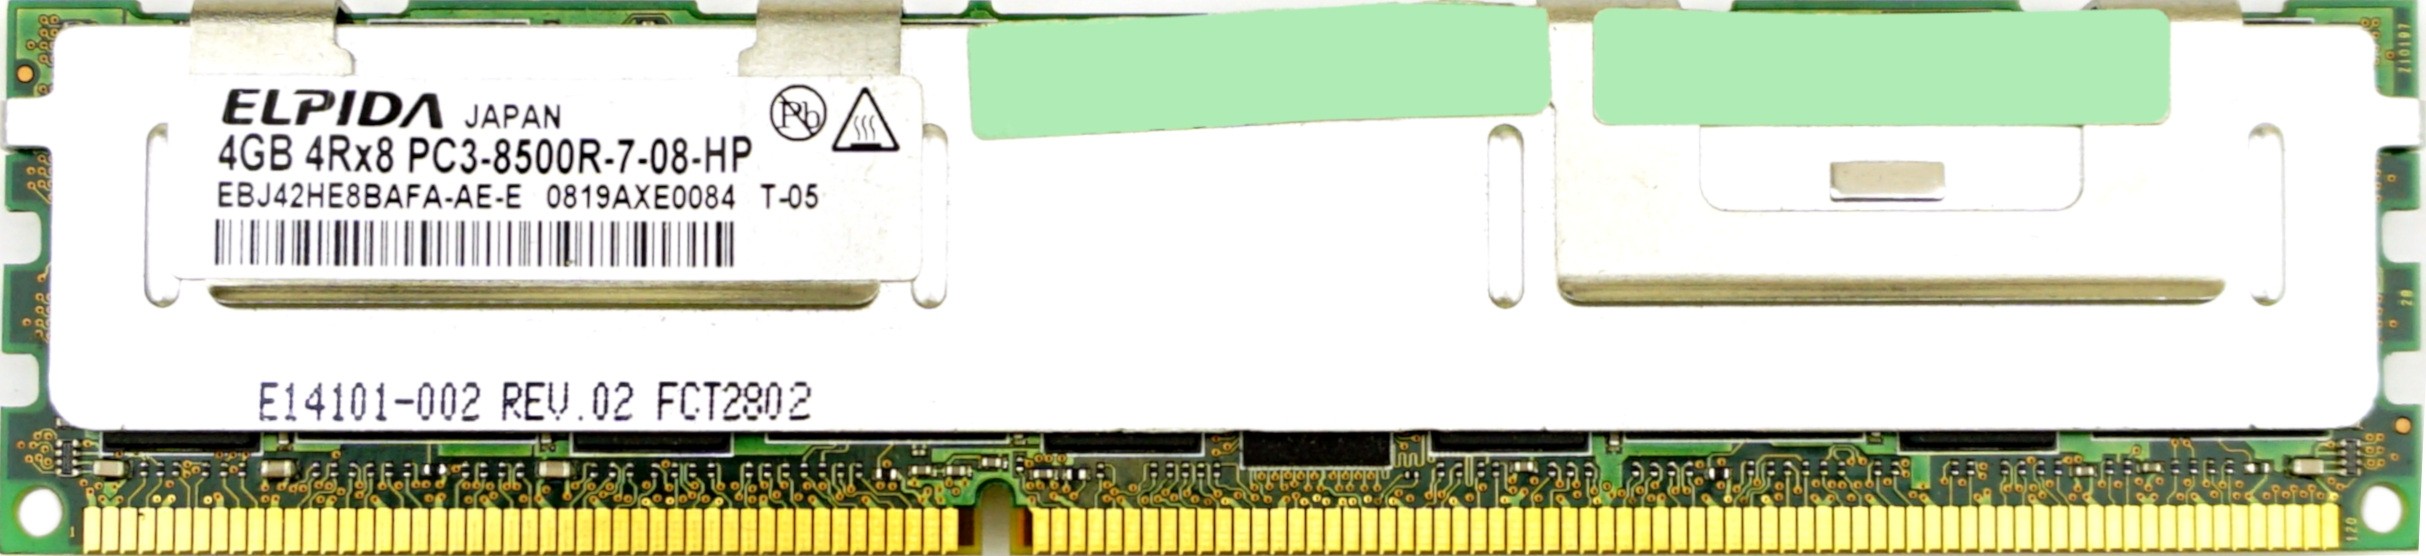 Unbranded - 4GB PC3-8500R (DDR3-1066Mhz, 4RX8)